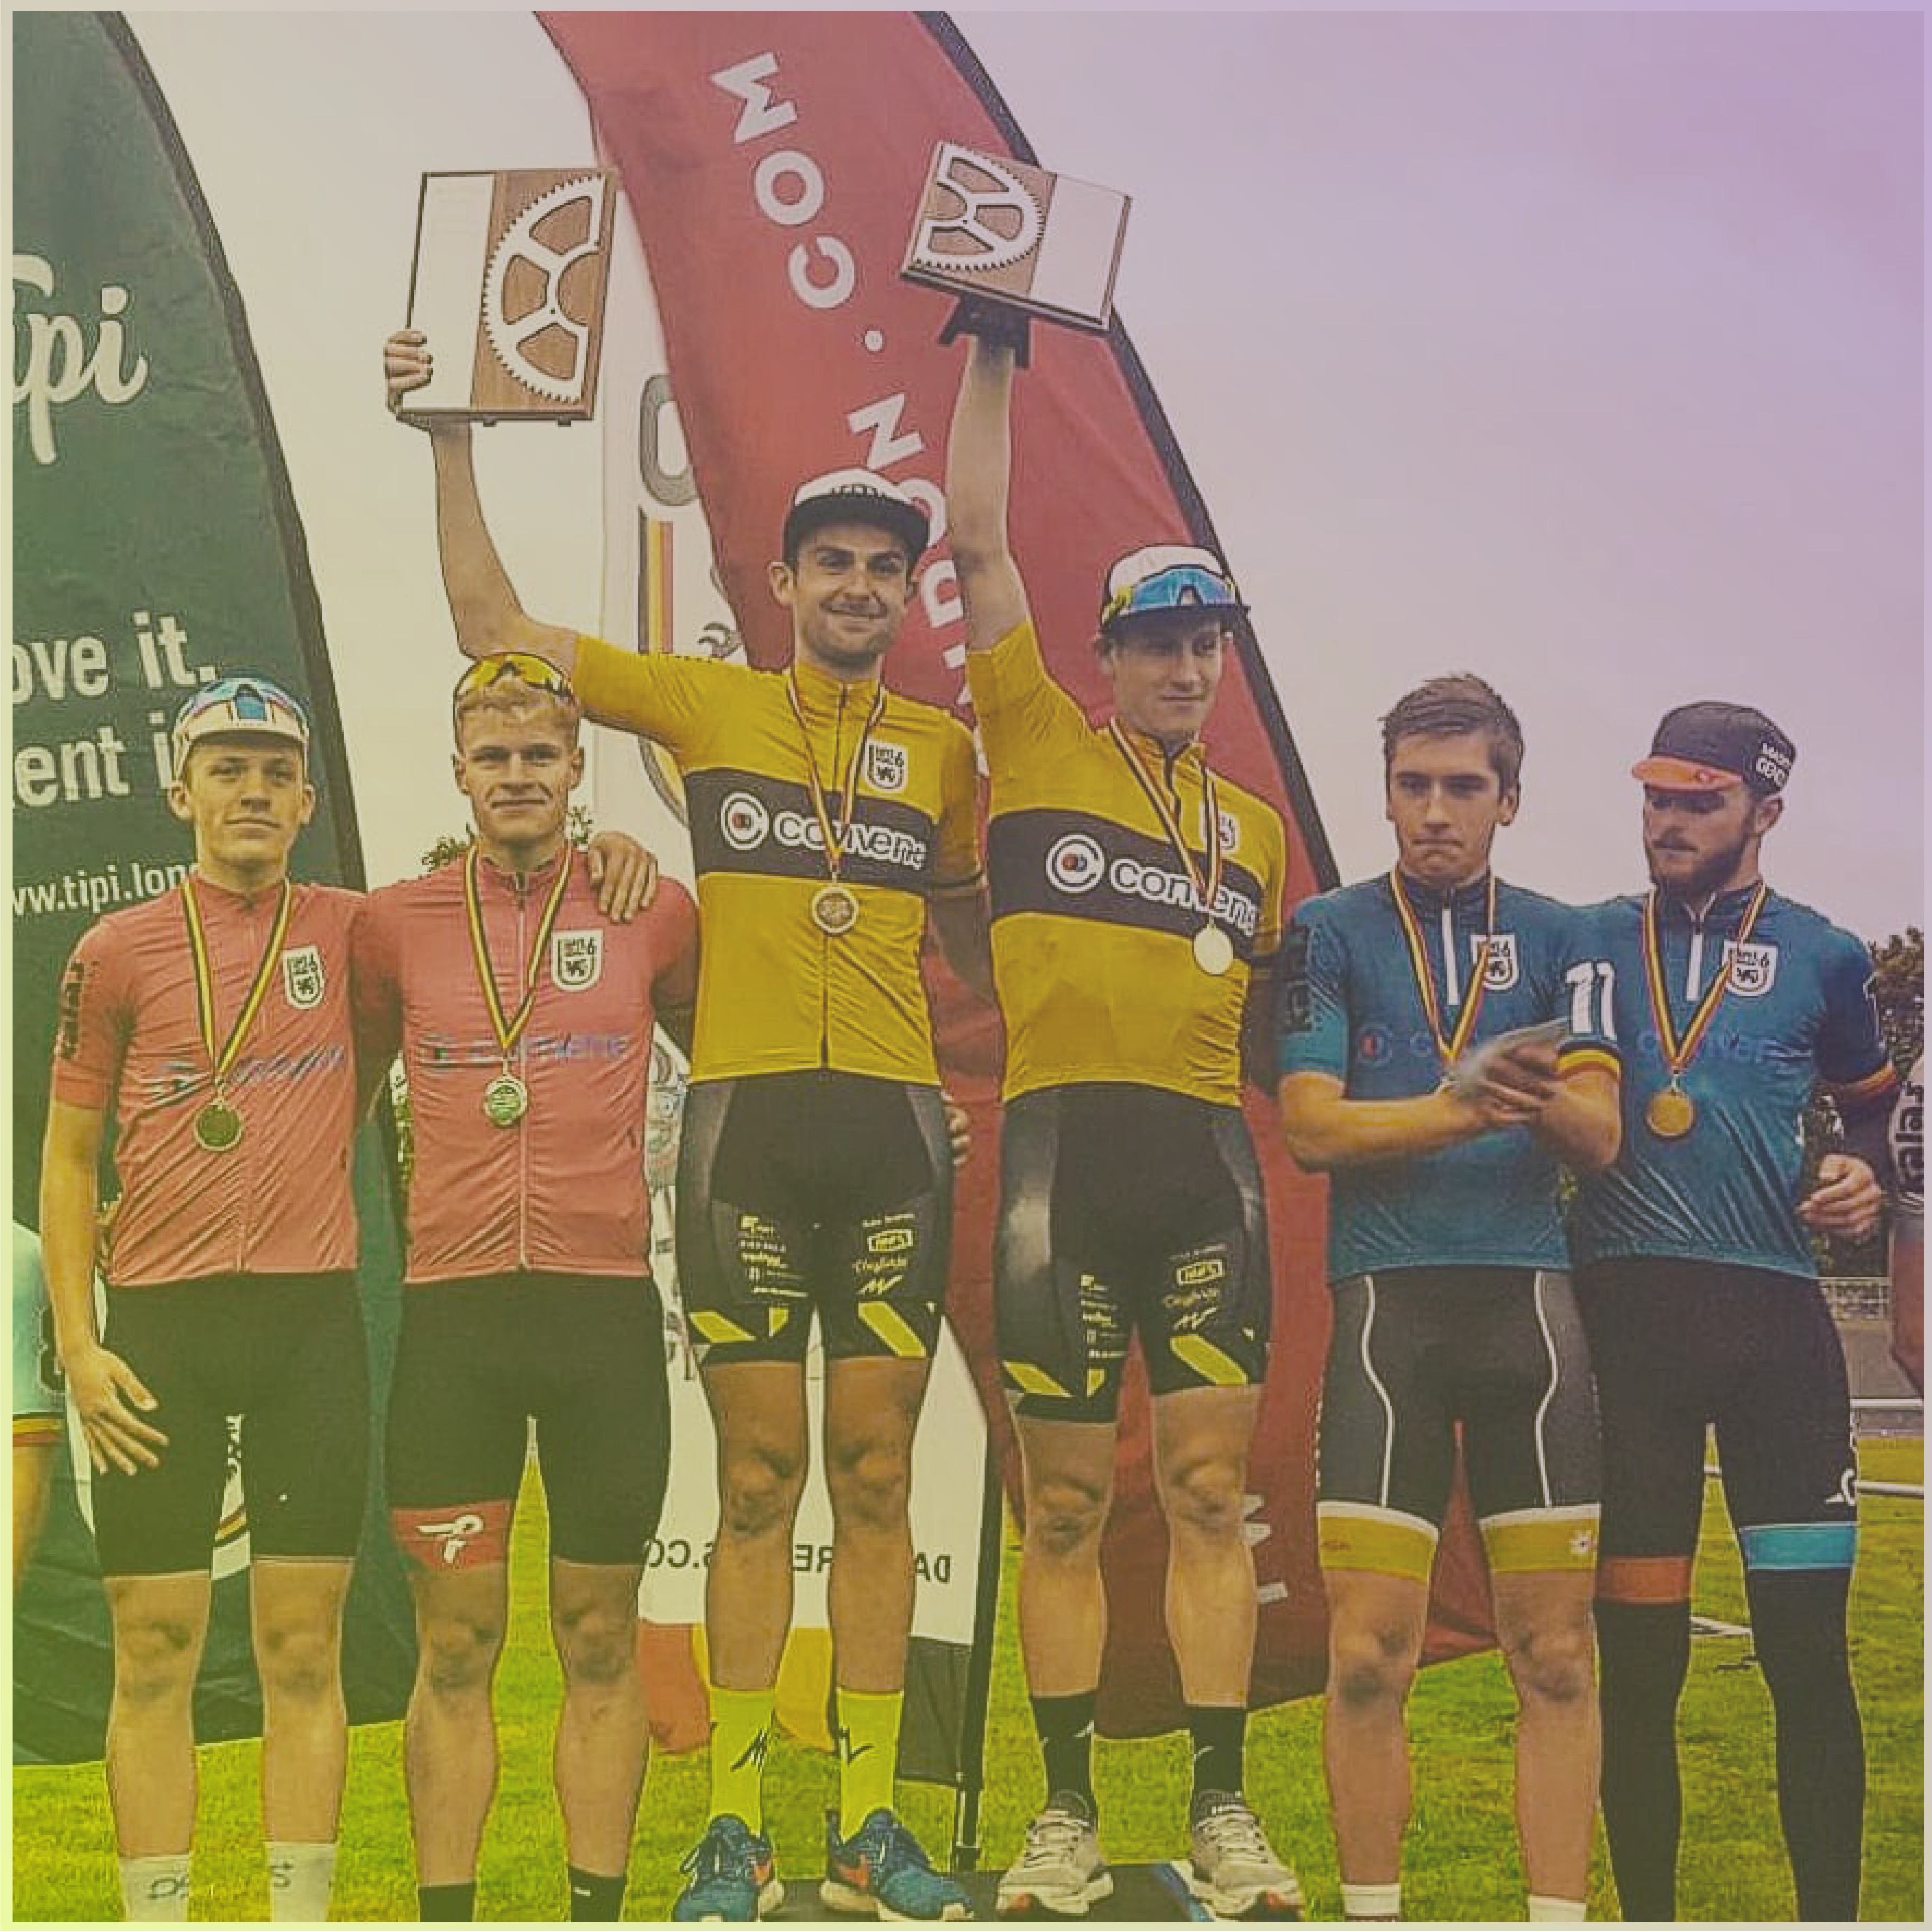 Stephen Bradbury, Mikey Mottram Track cycling Madison winners | Custom Cycle Coaching UK